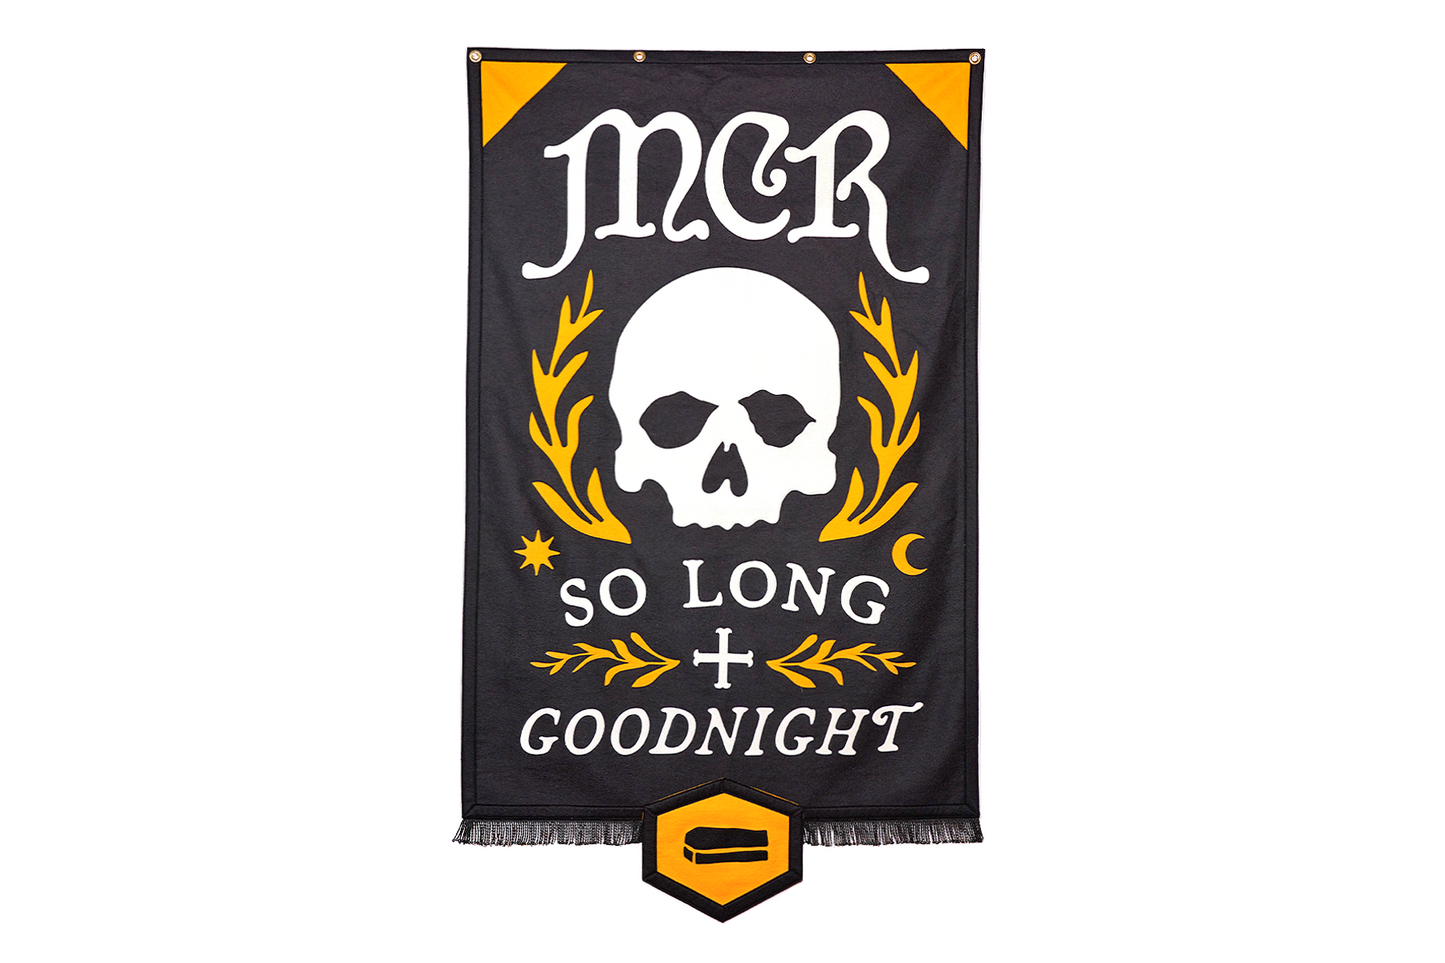 So Long Goodnight Championship Banner - MCR x Oxford Pennant